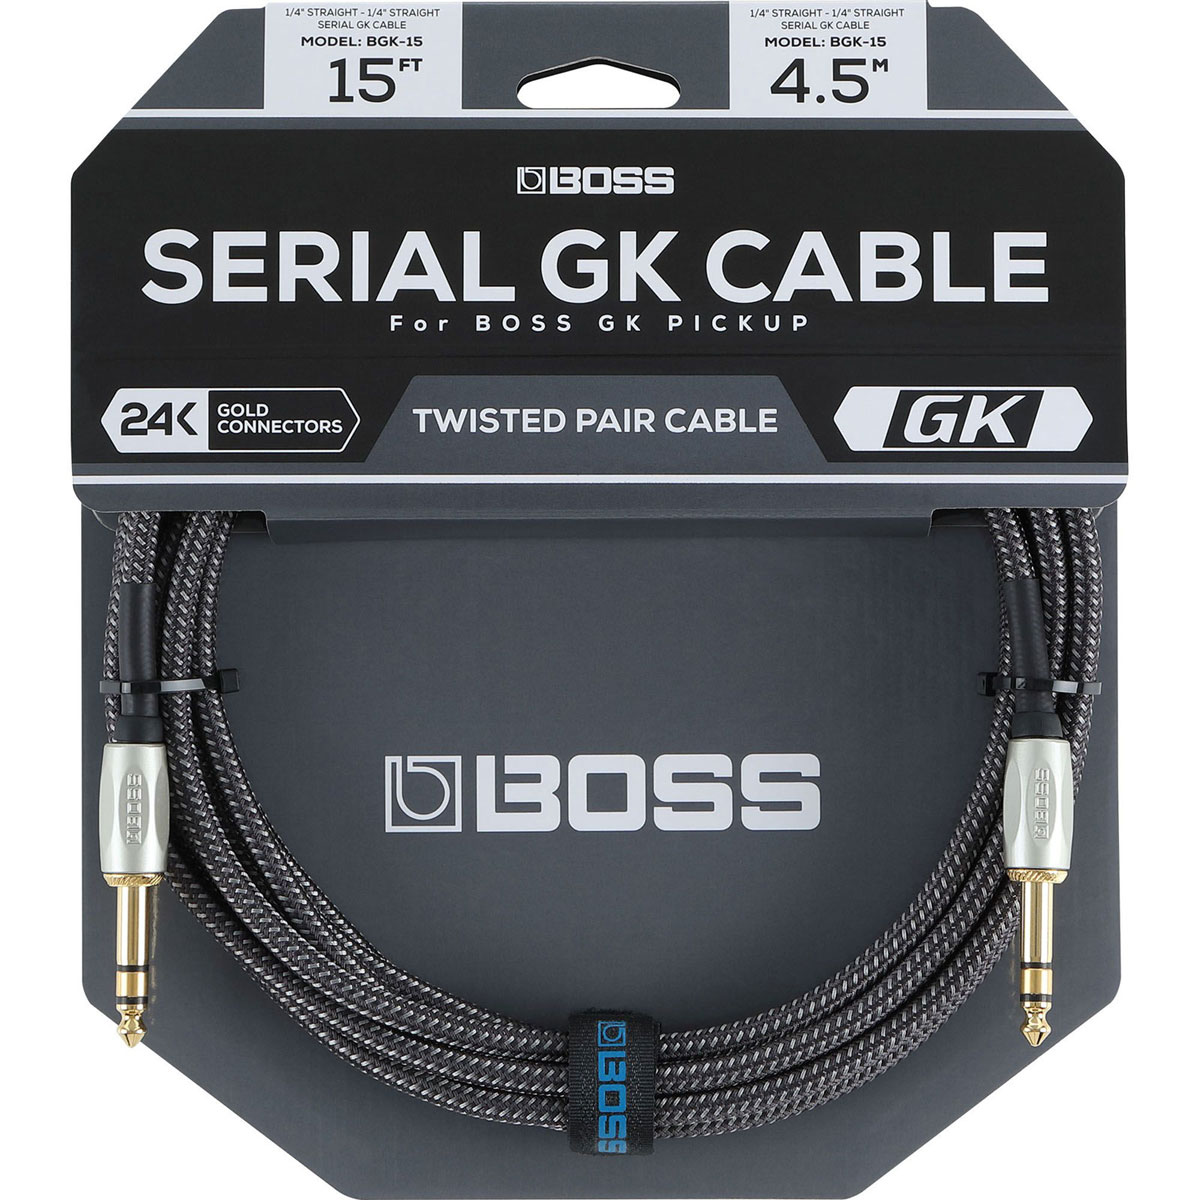 BOSS BGK-15 GK CABLE